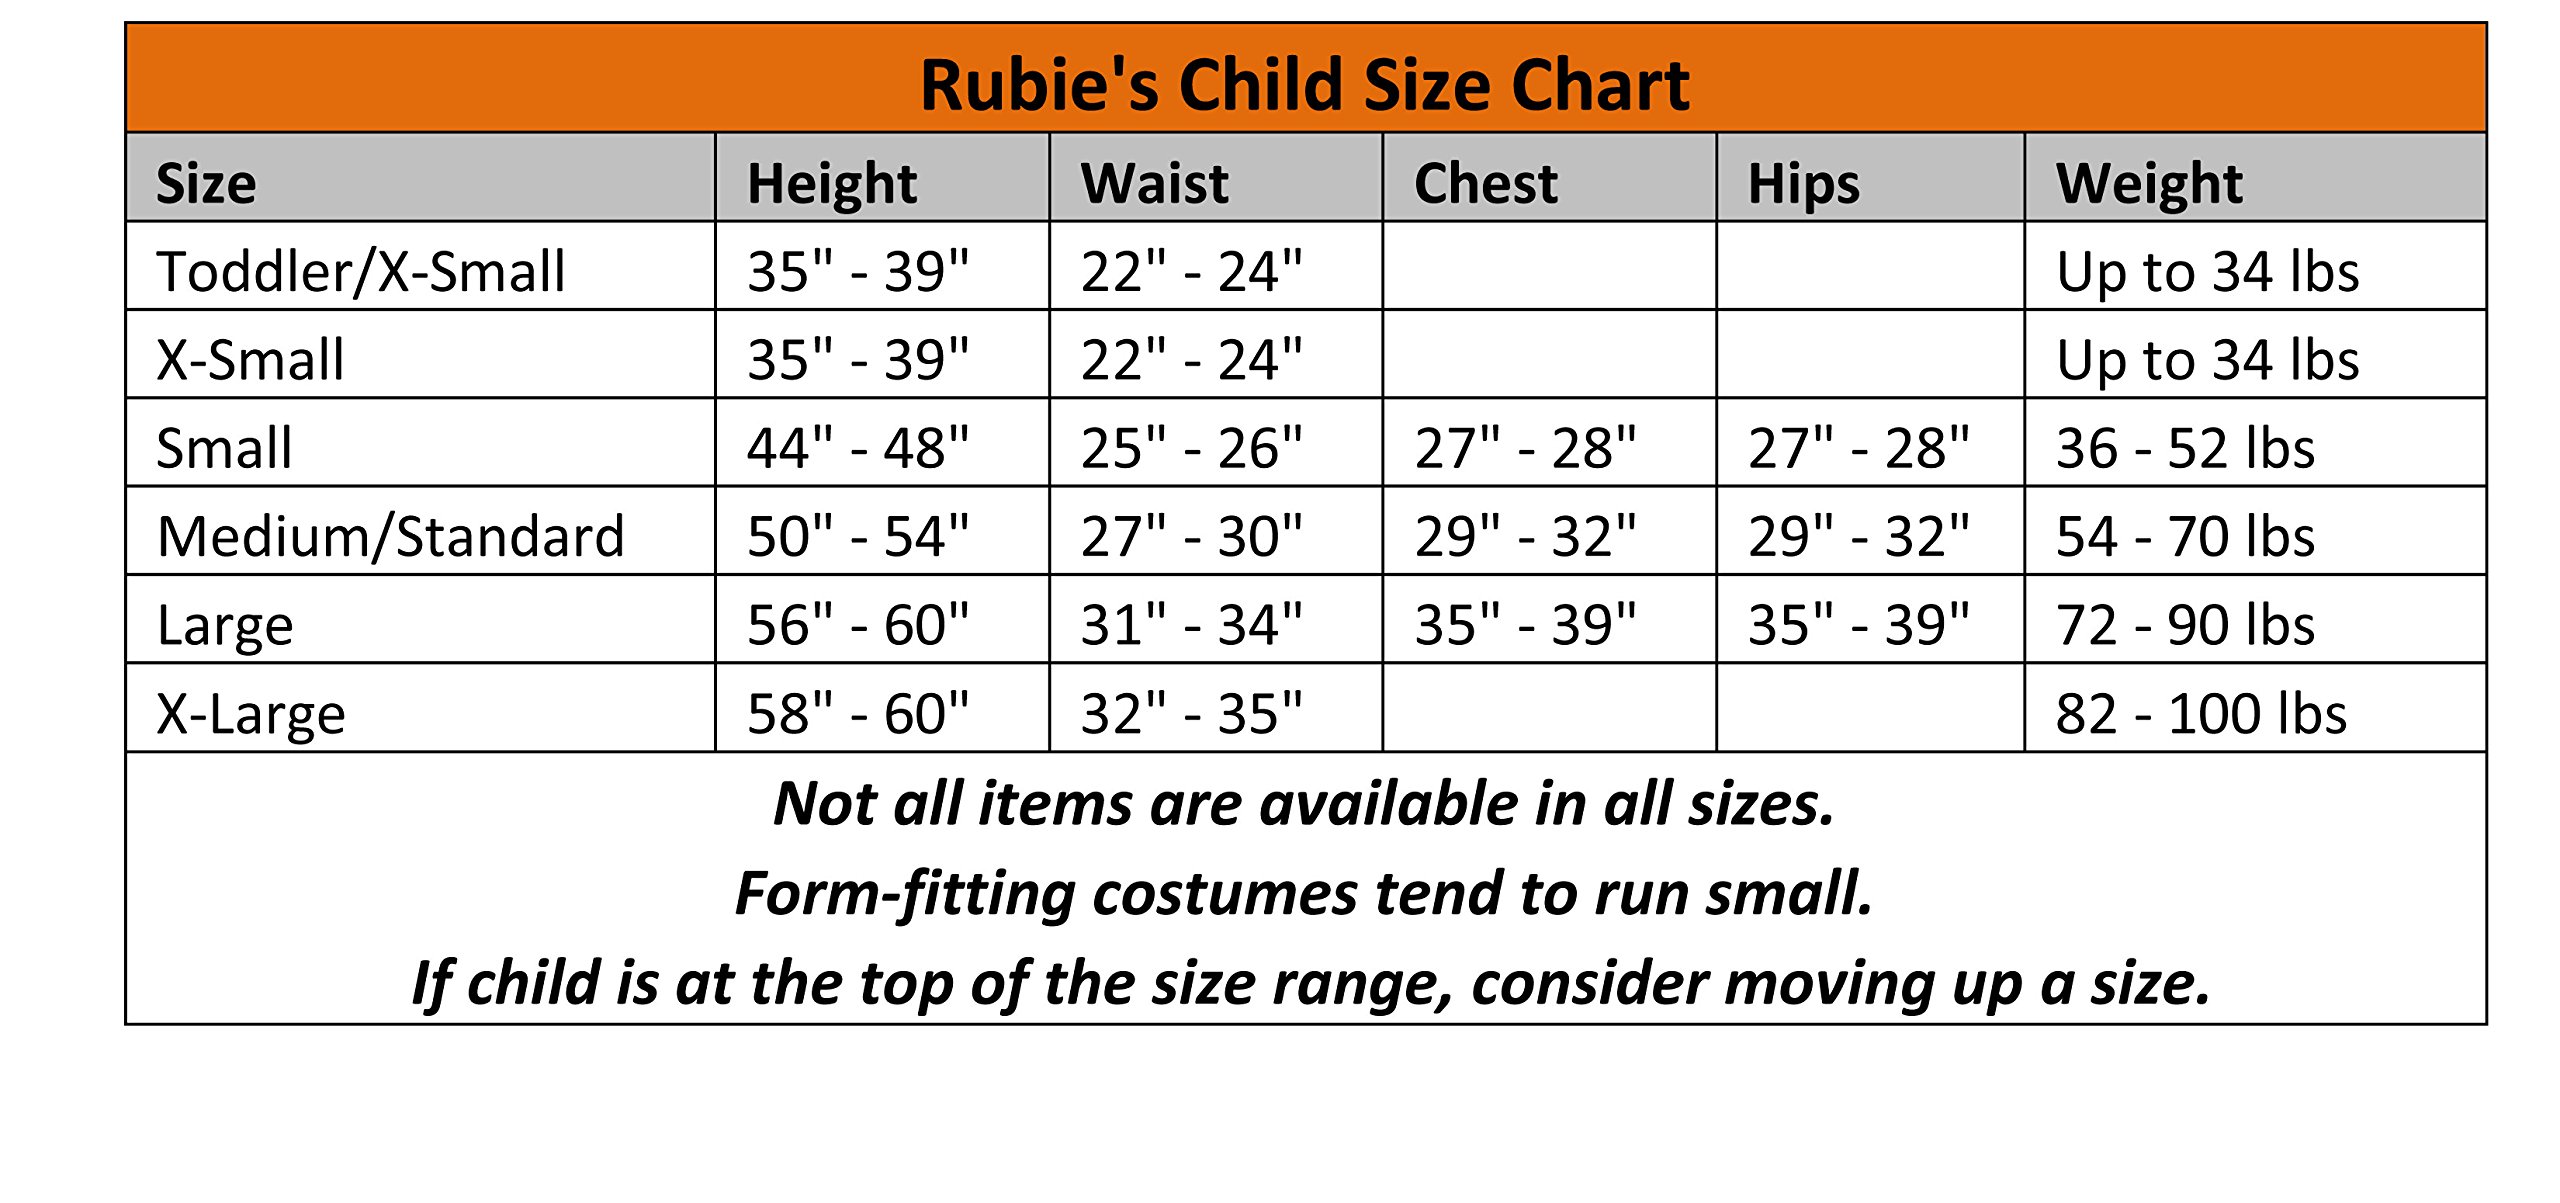 Rubie's Let's Pretend Child's Cheerleader Camp Costume